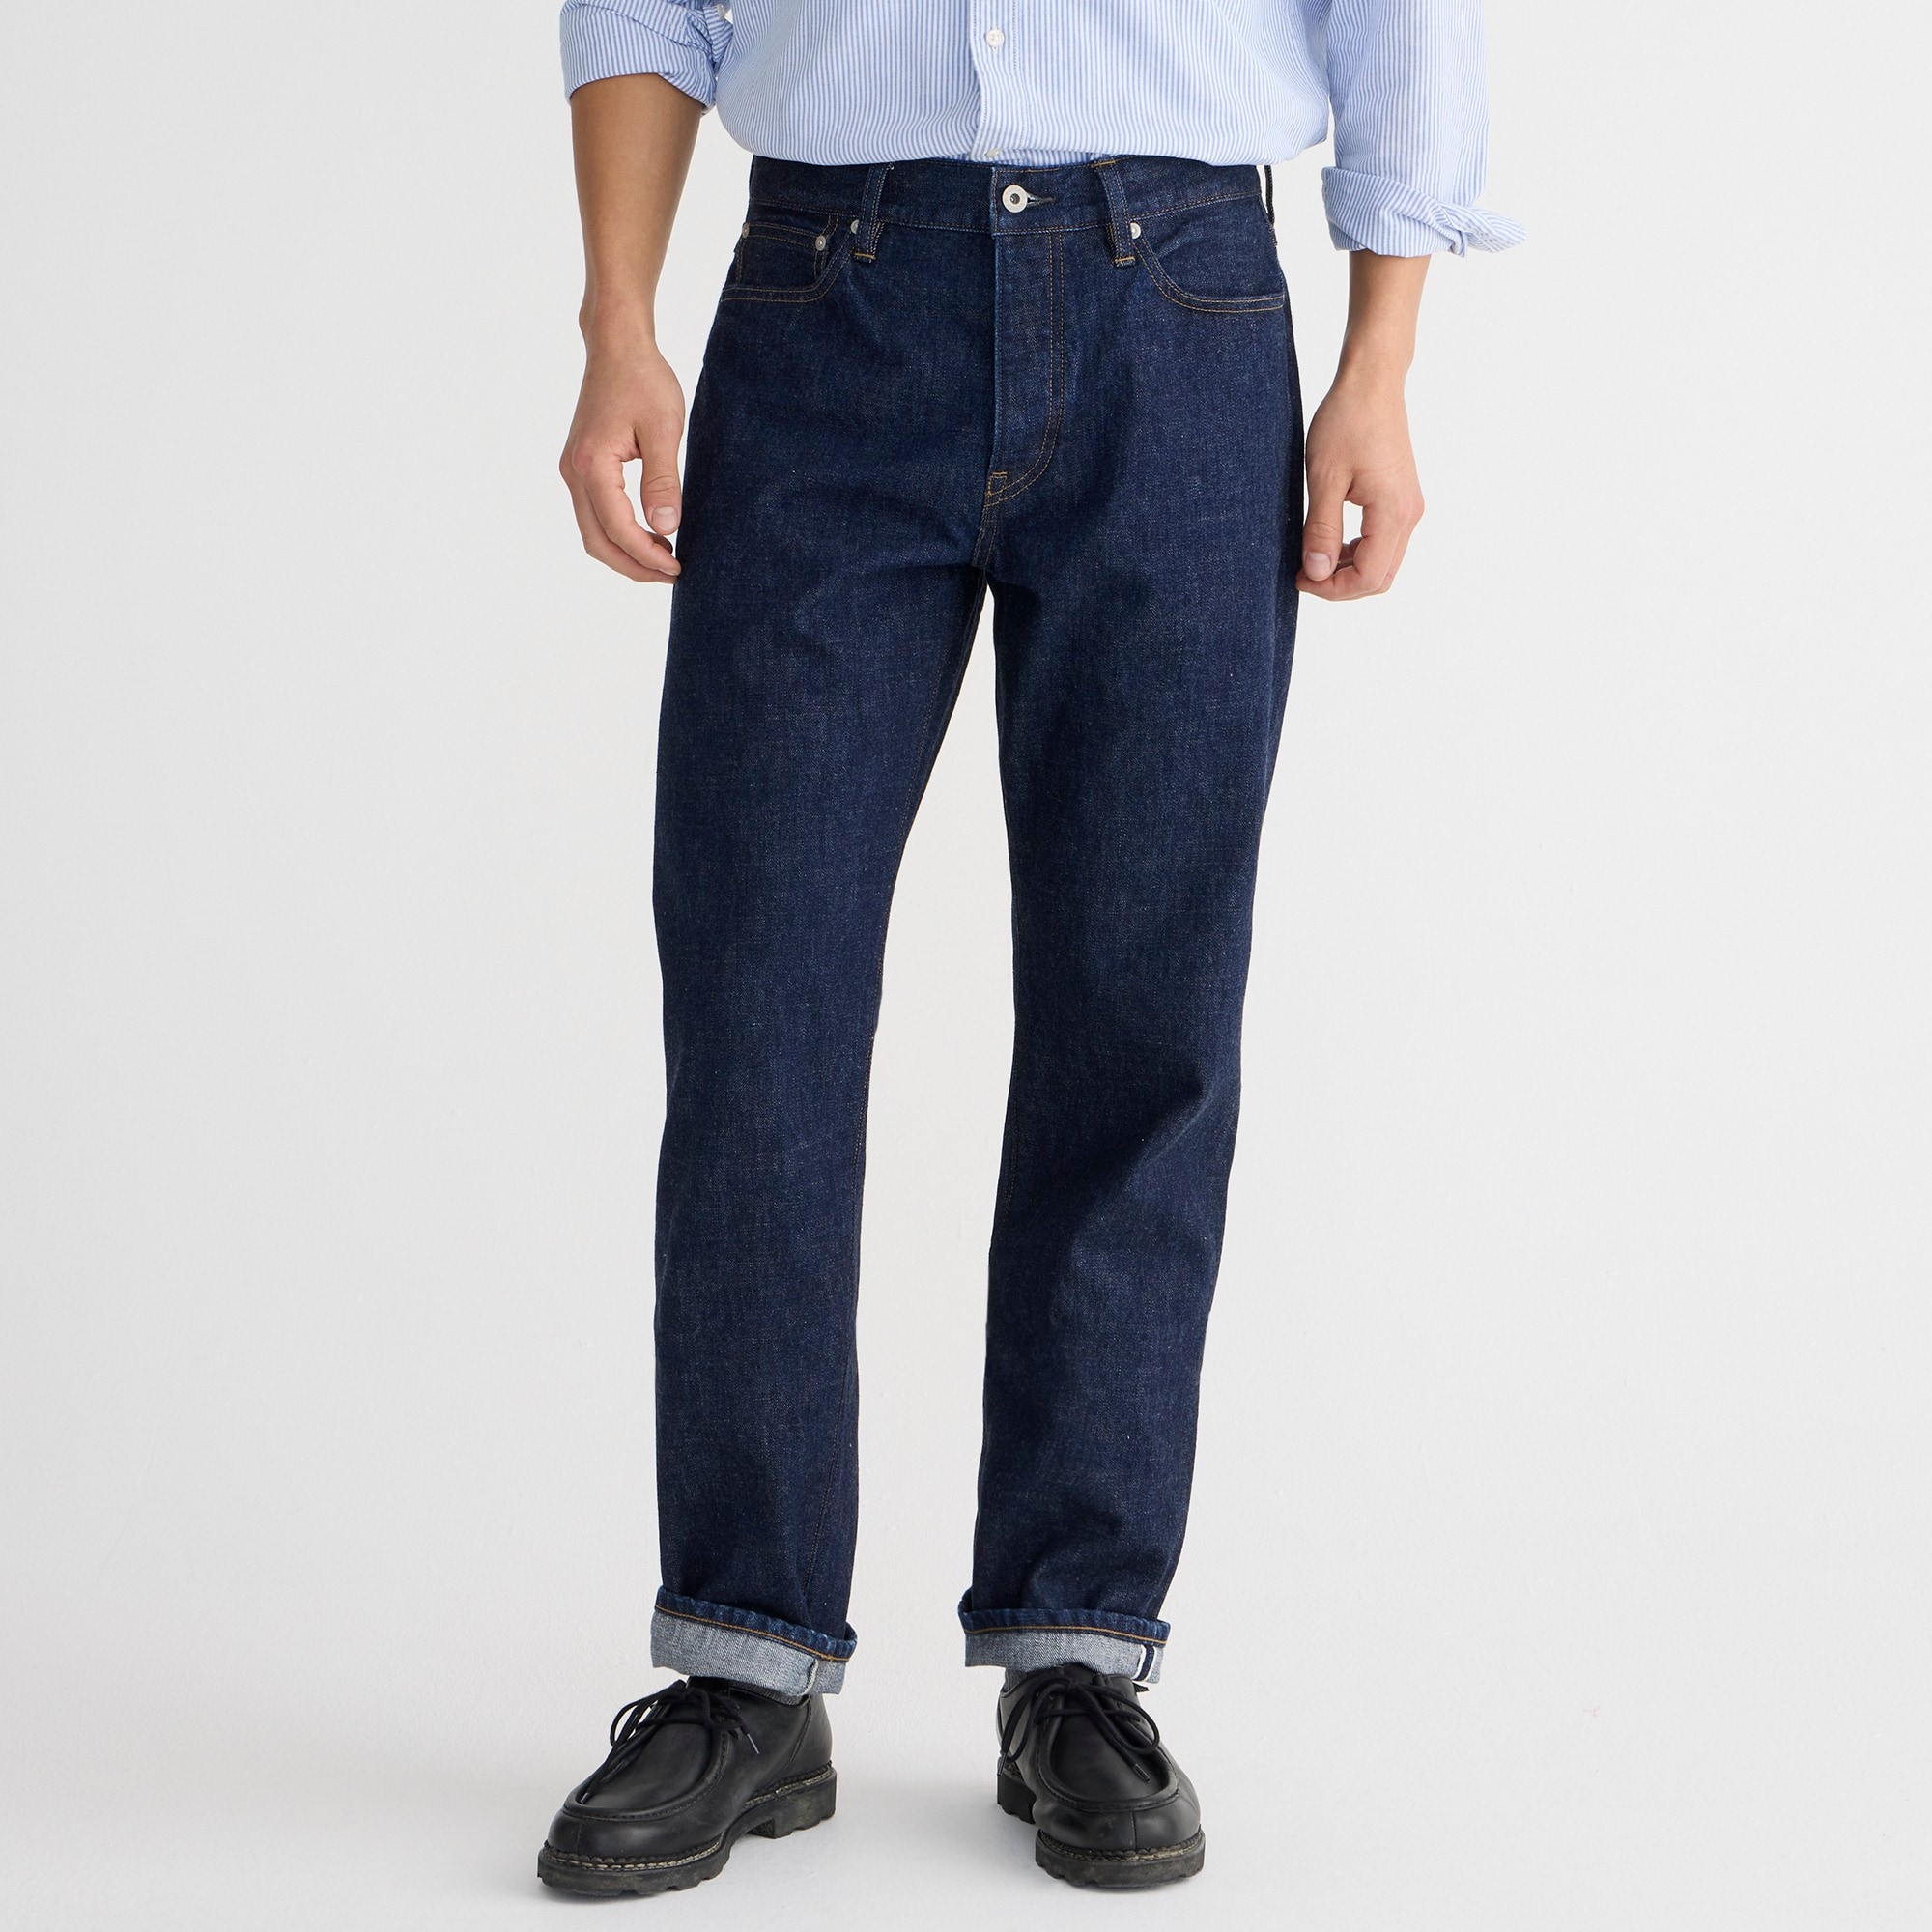 Jcrew Wallace u0026amp; Barnes straight-fit jean in Japanese selvedge denim